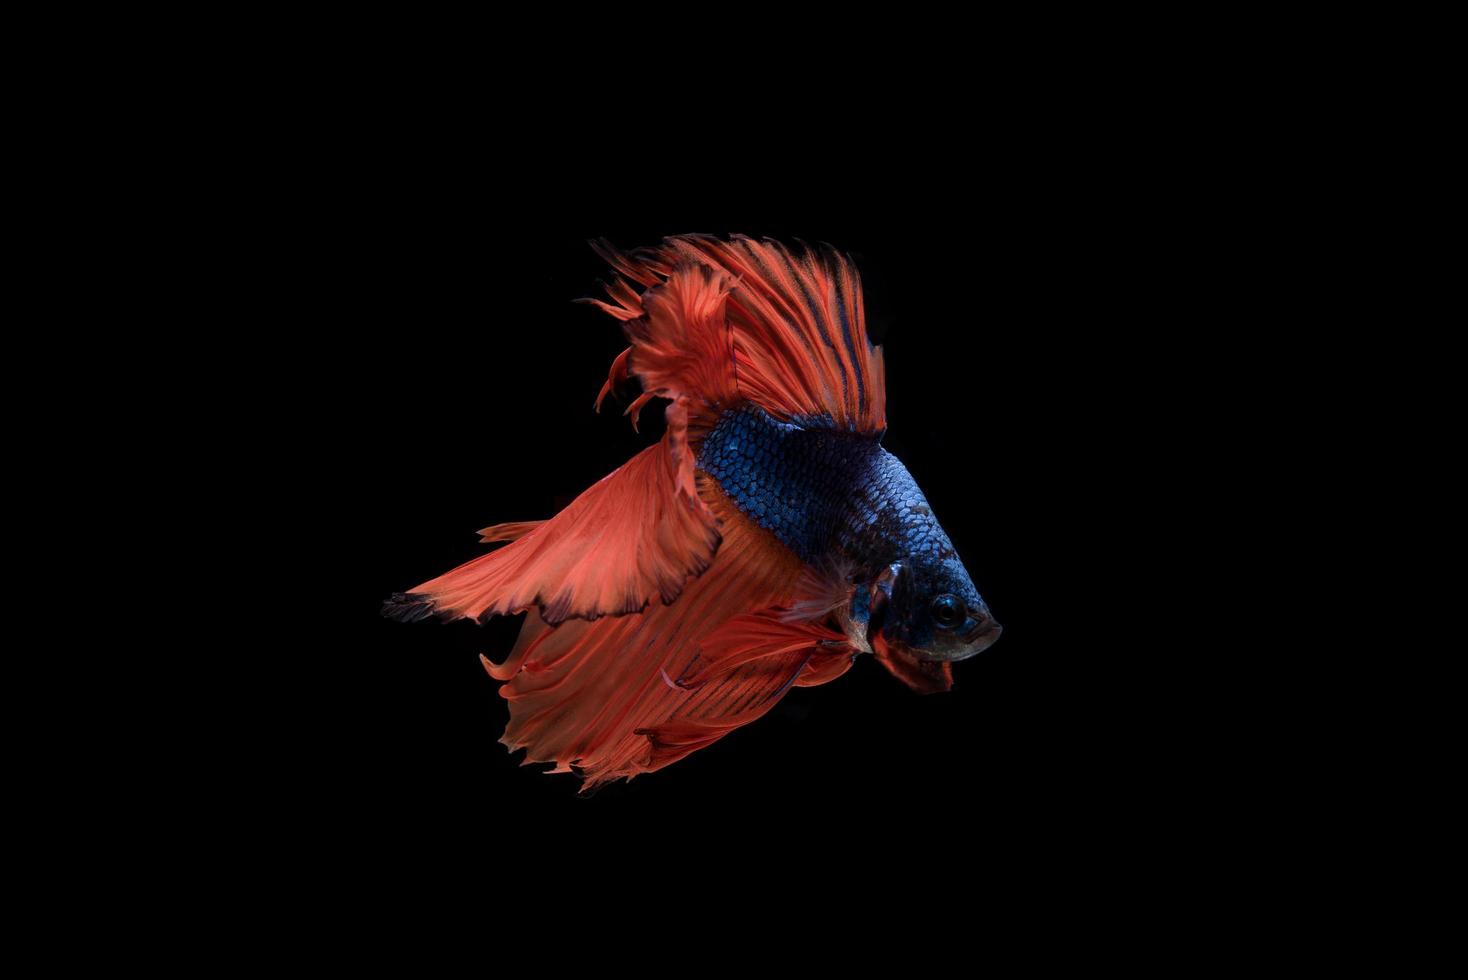 Beautiful colorful siamese betta fish photo